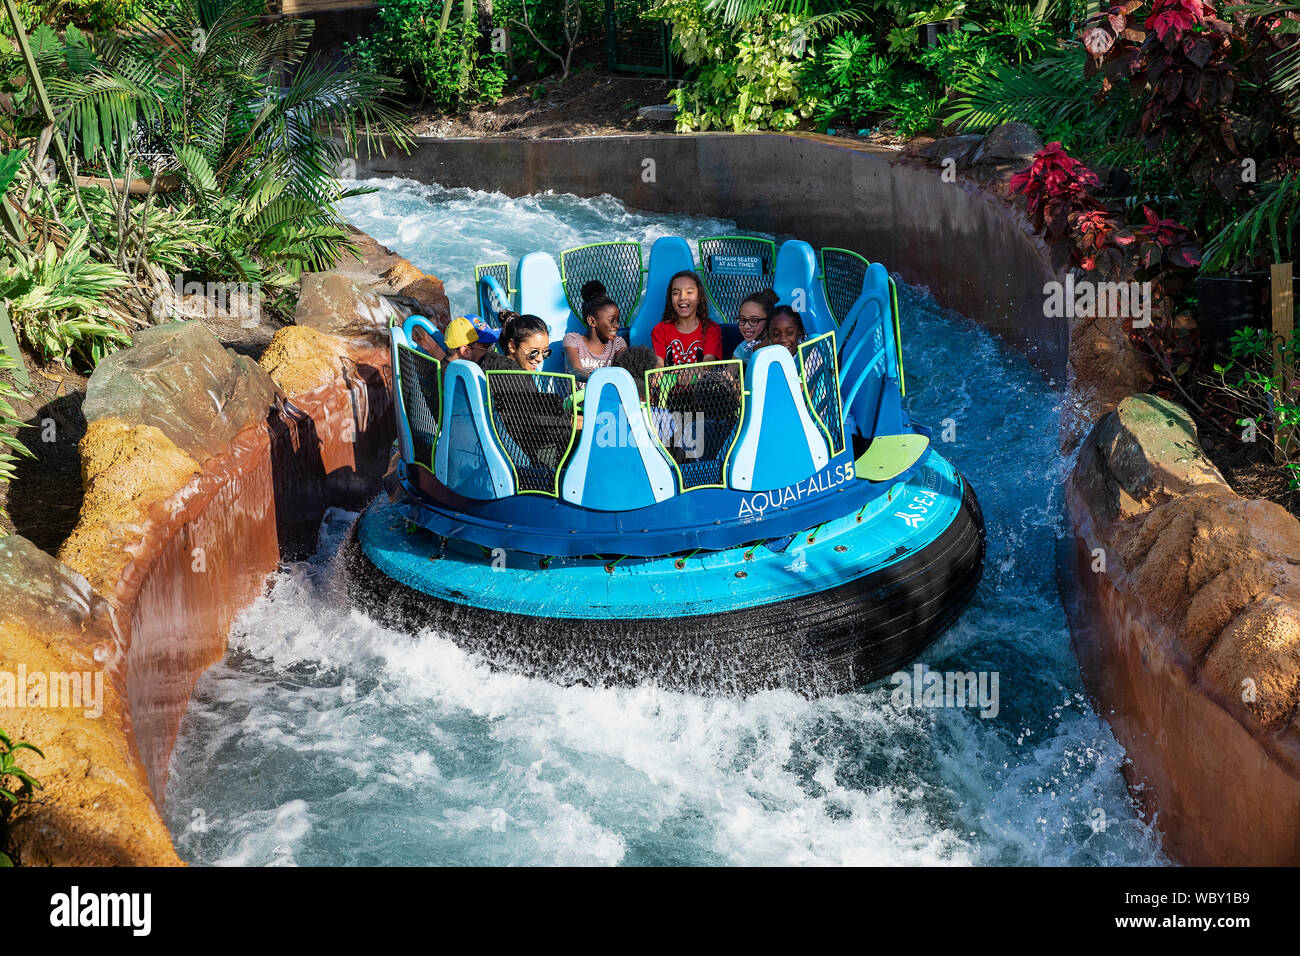 AquaFalls Water Ride At Seaworld Orlando Florida USA Stock Photo Alamy